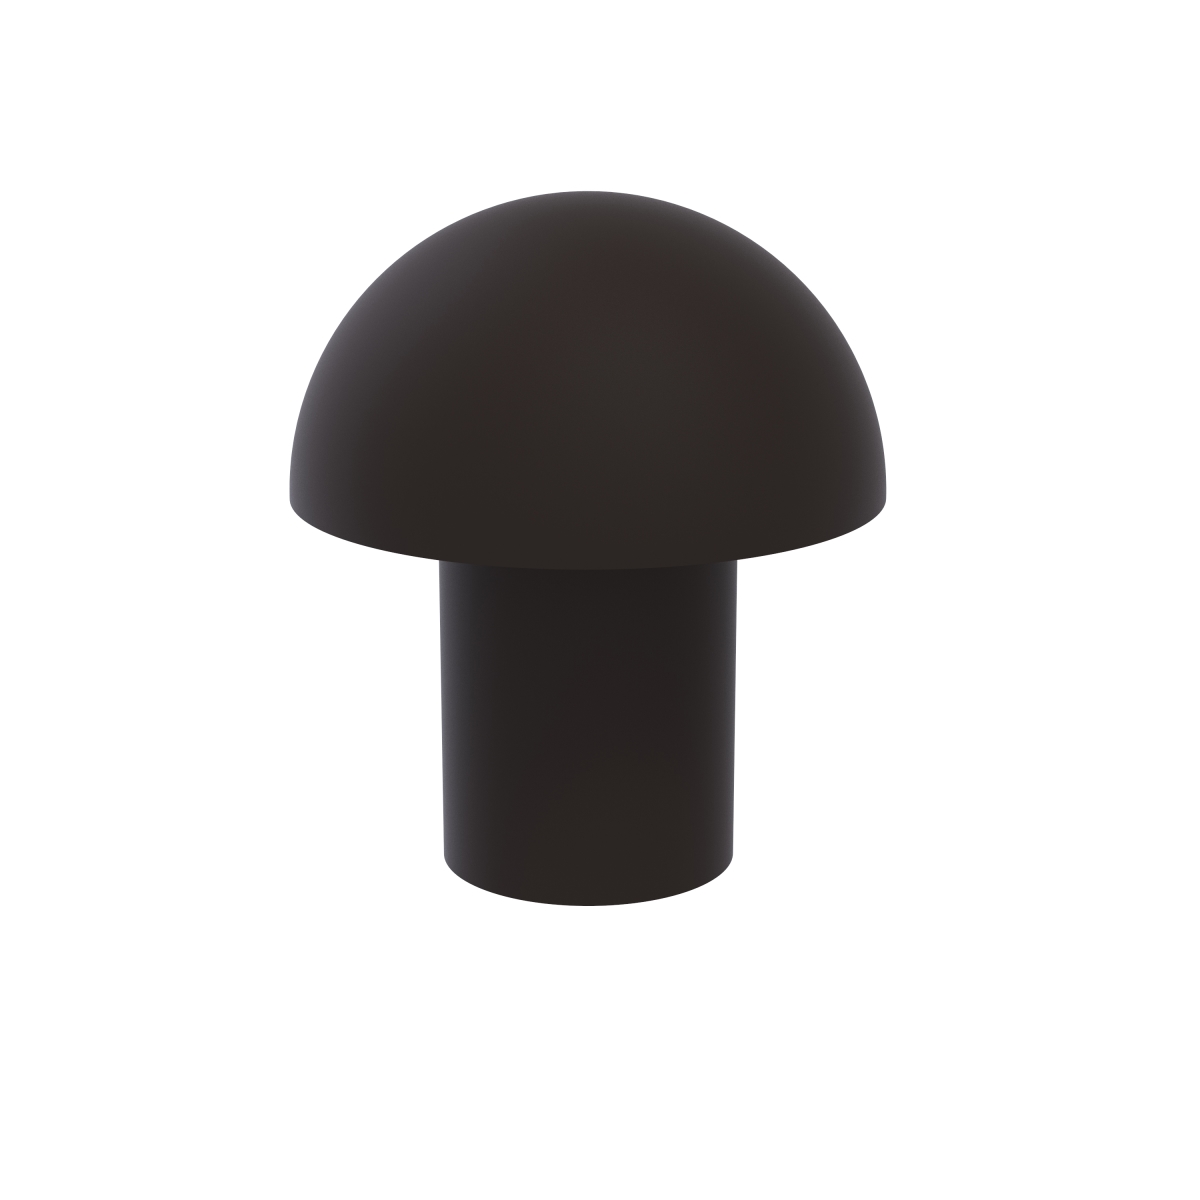 106-orb 1 In. Round Mushroom Cabinet Knob, Oil Rubbed Bronze